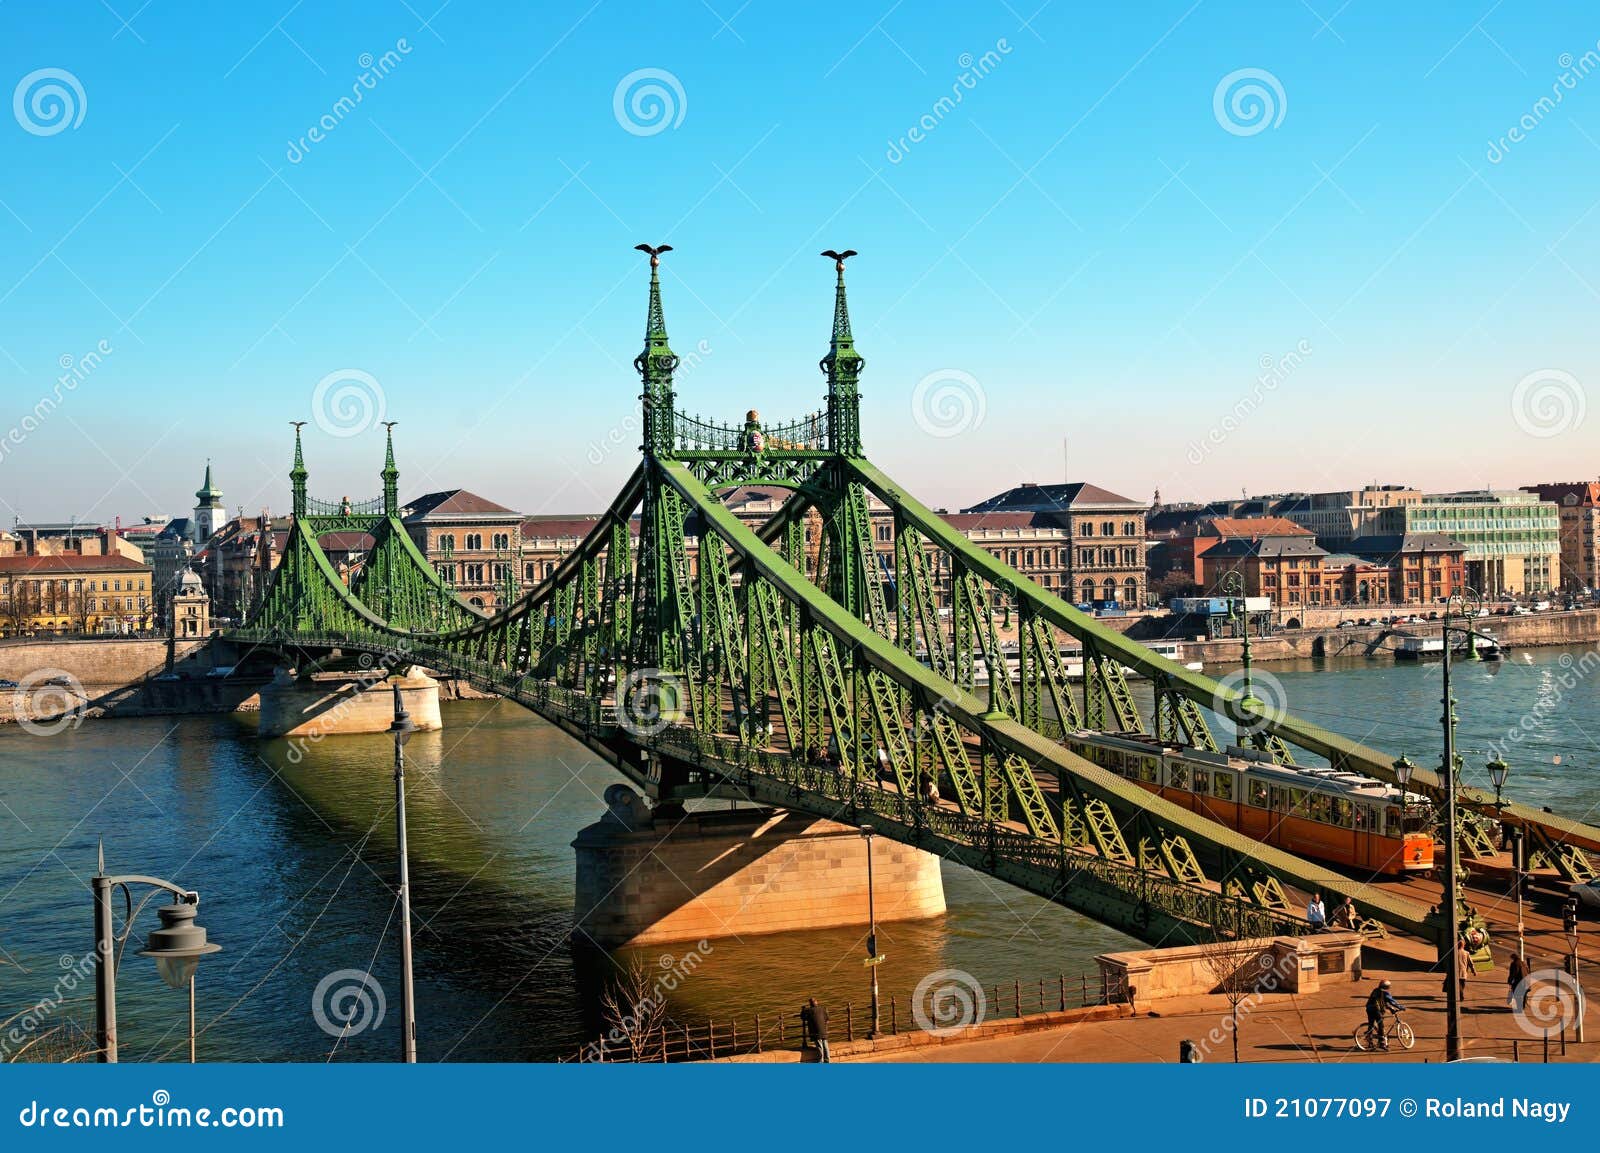 Image result for bridge in budapest